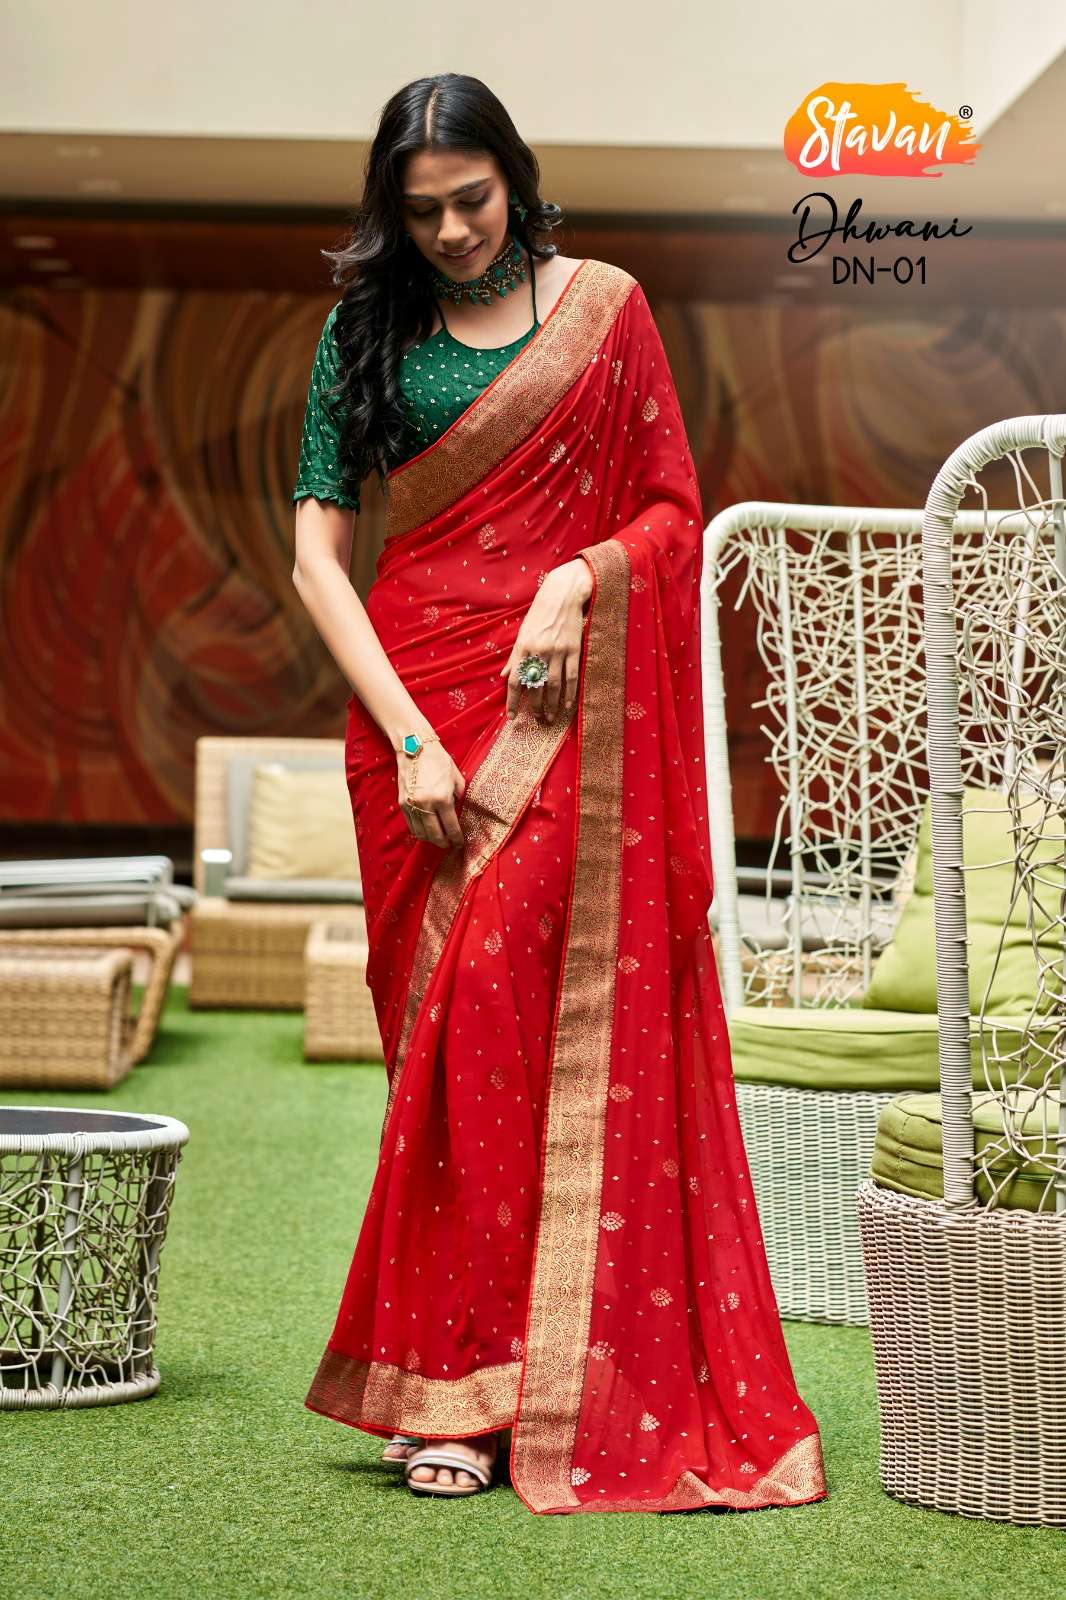 Stavan Dhwani Georgette with fancy weaving Border saree coll...